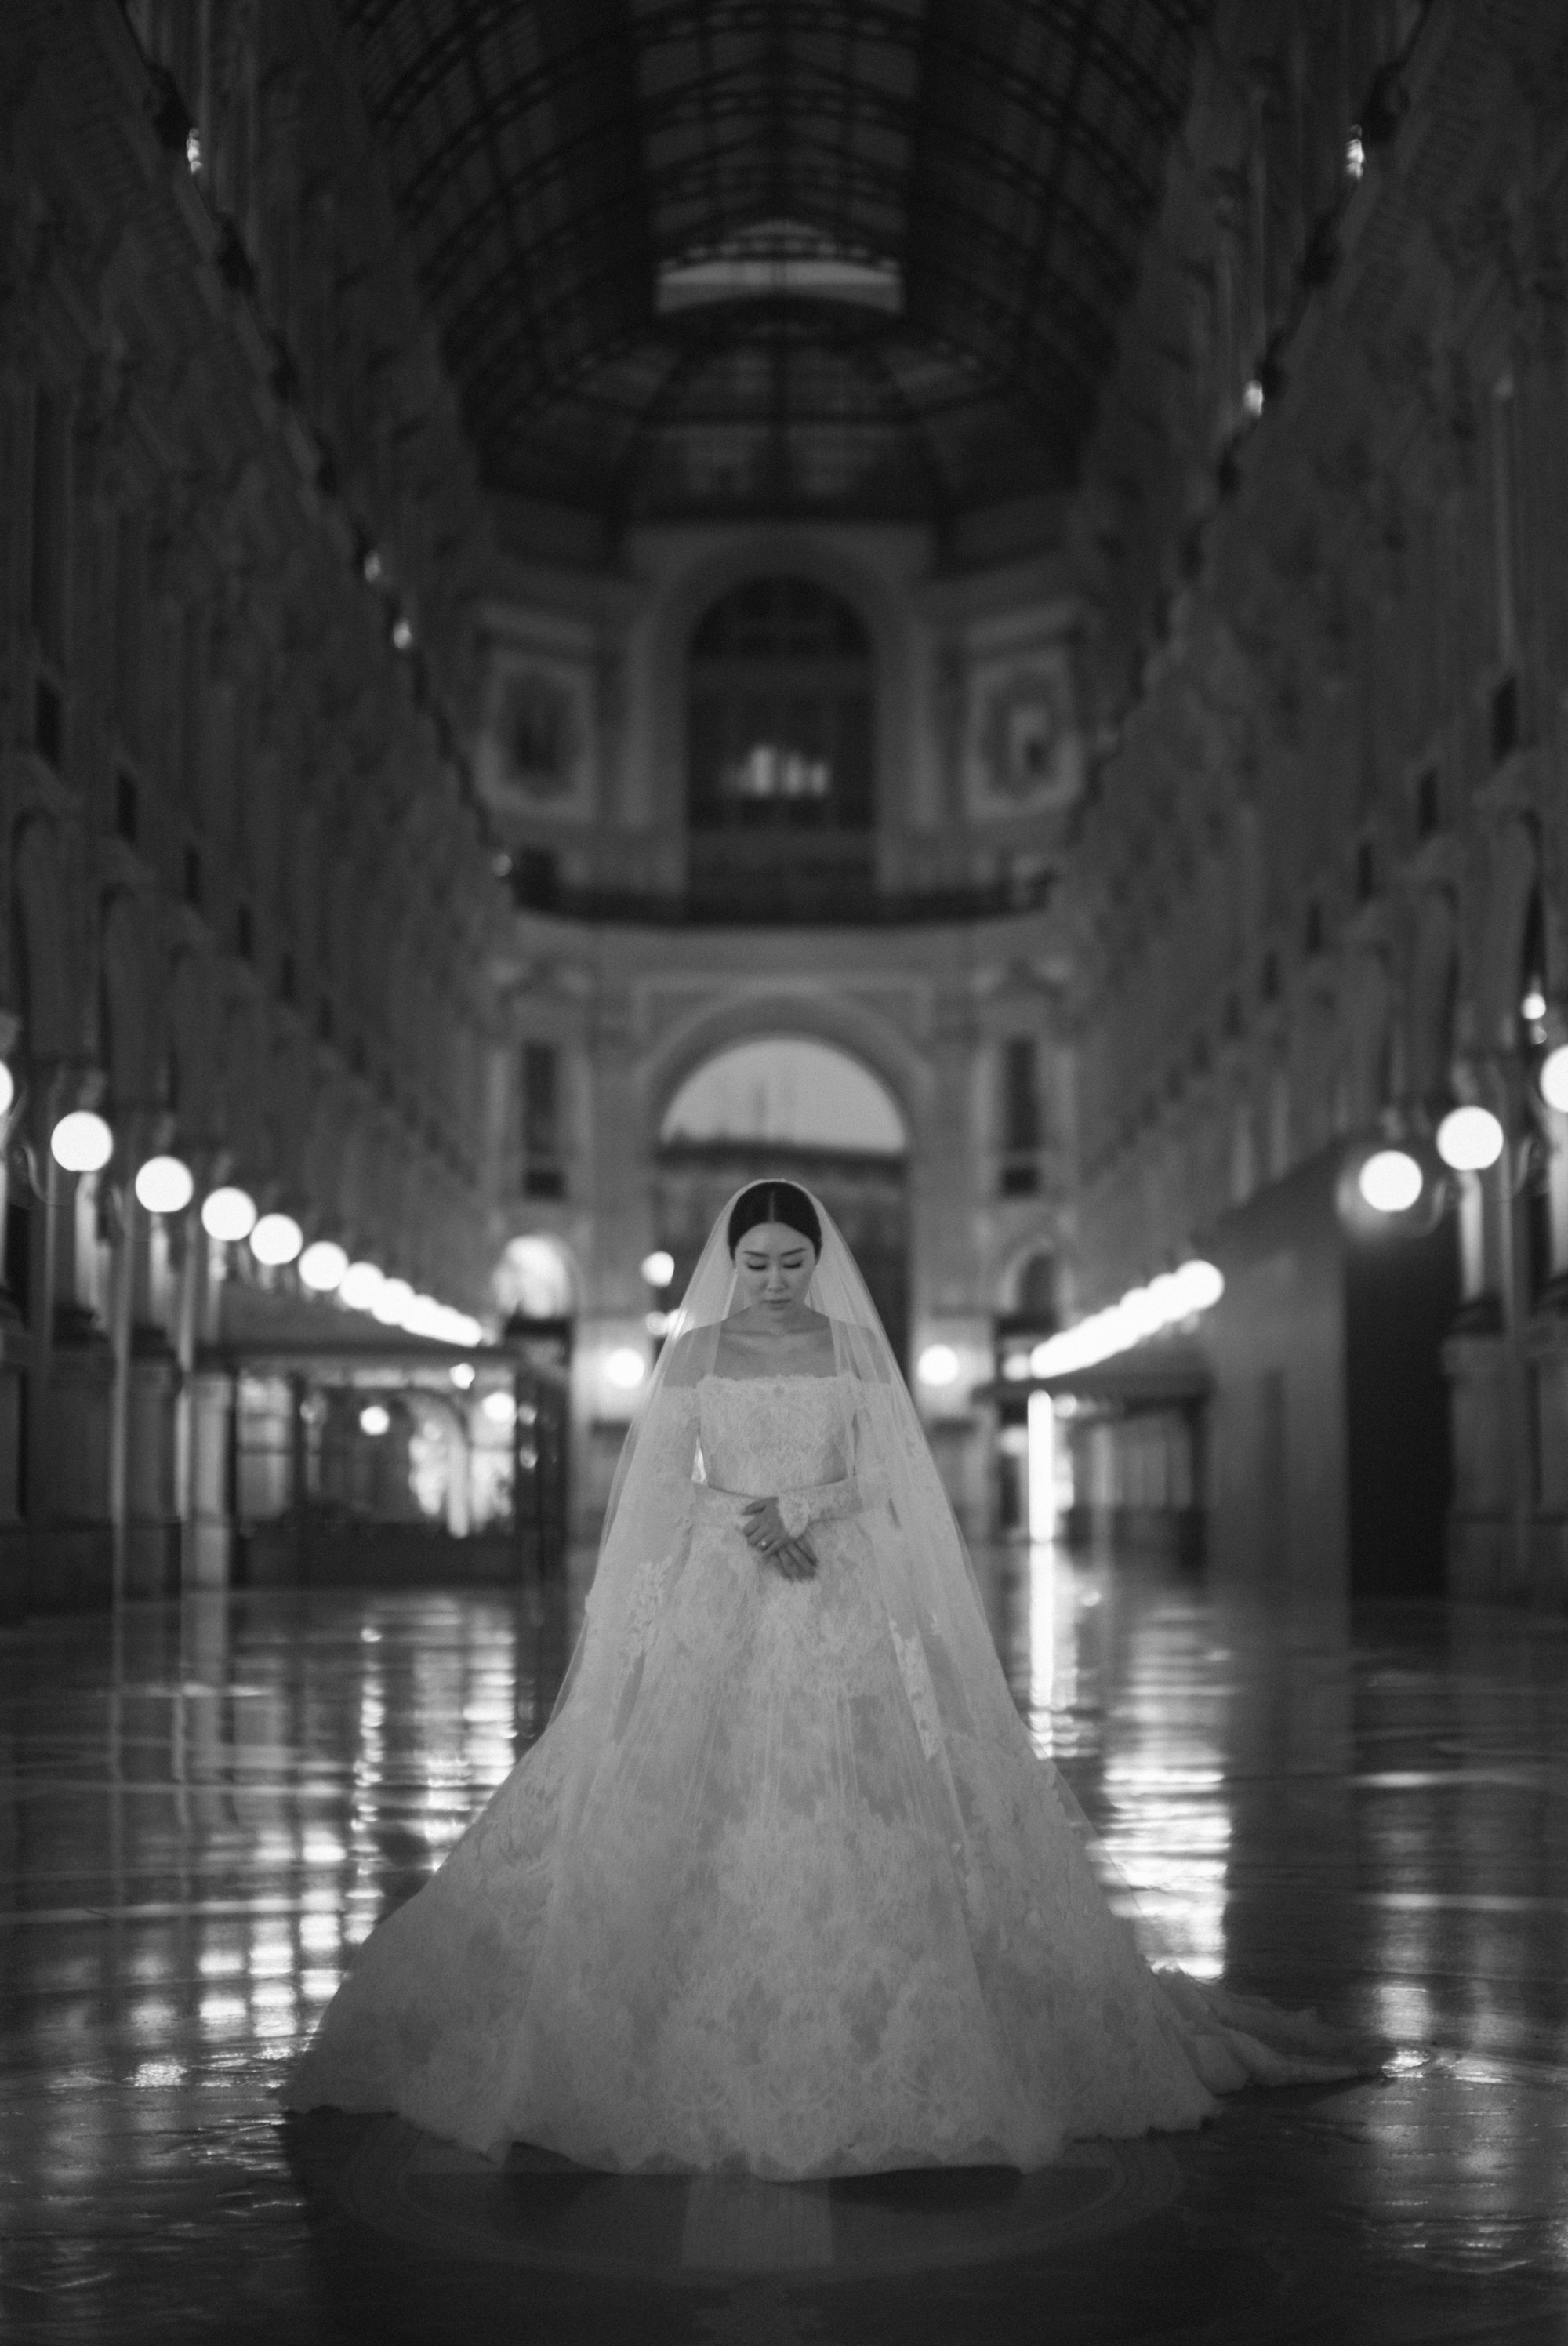 Prawira-Evelyn-Dolomites-Italy-Santre wedding-Yefta Gunawan-Jeriko MUA-Carol Kuntjoro Photography-8.jpg